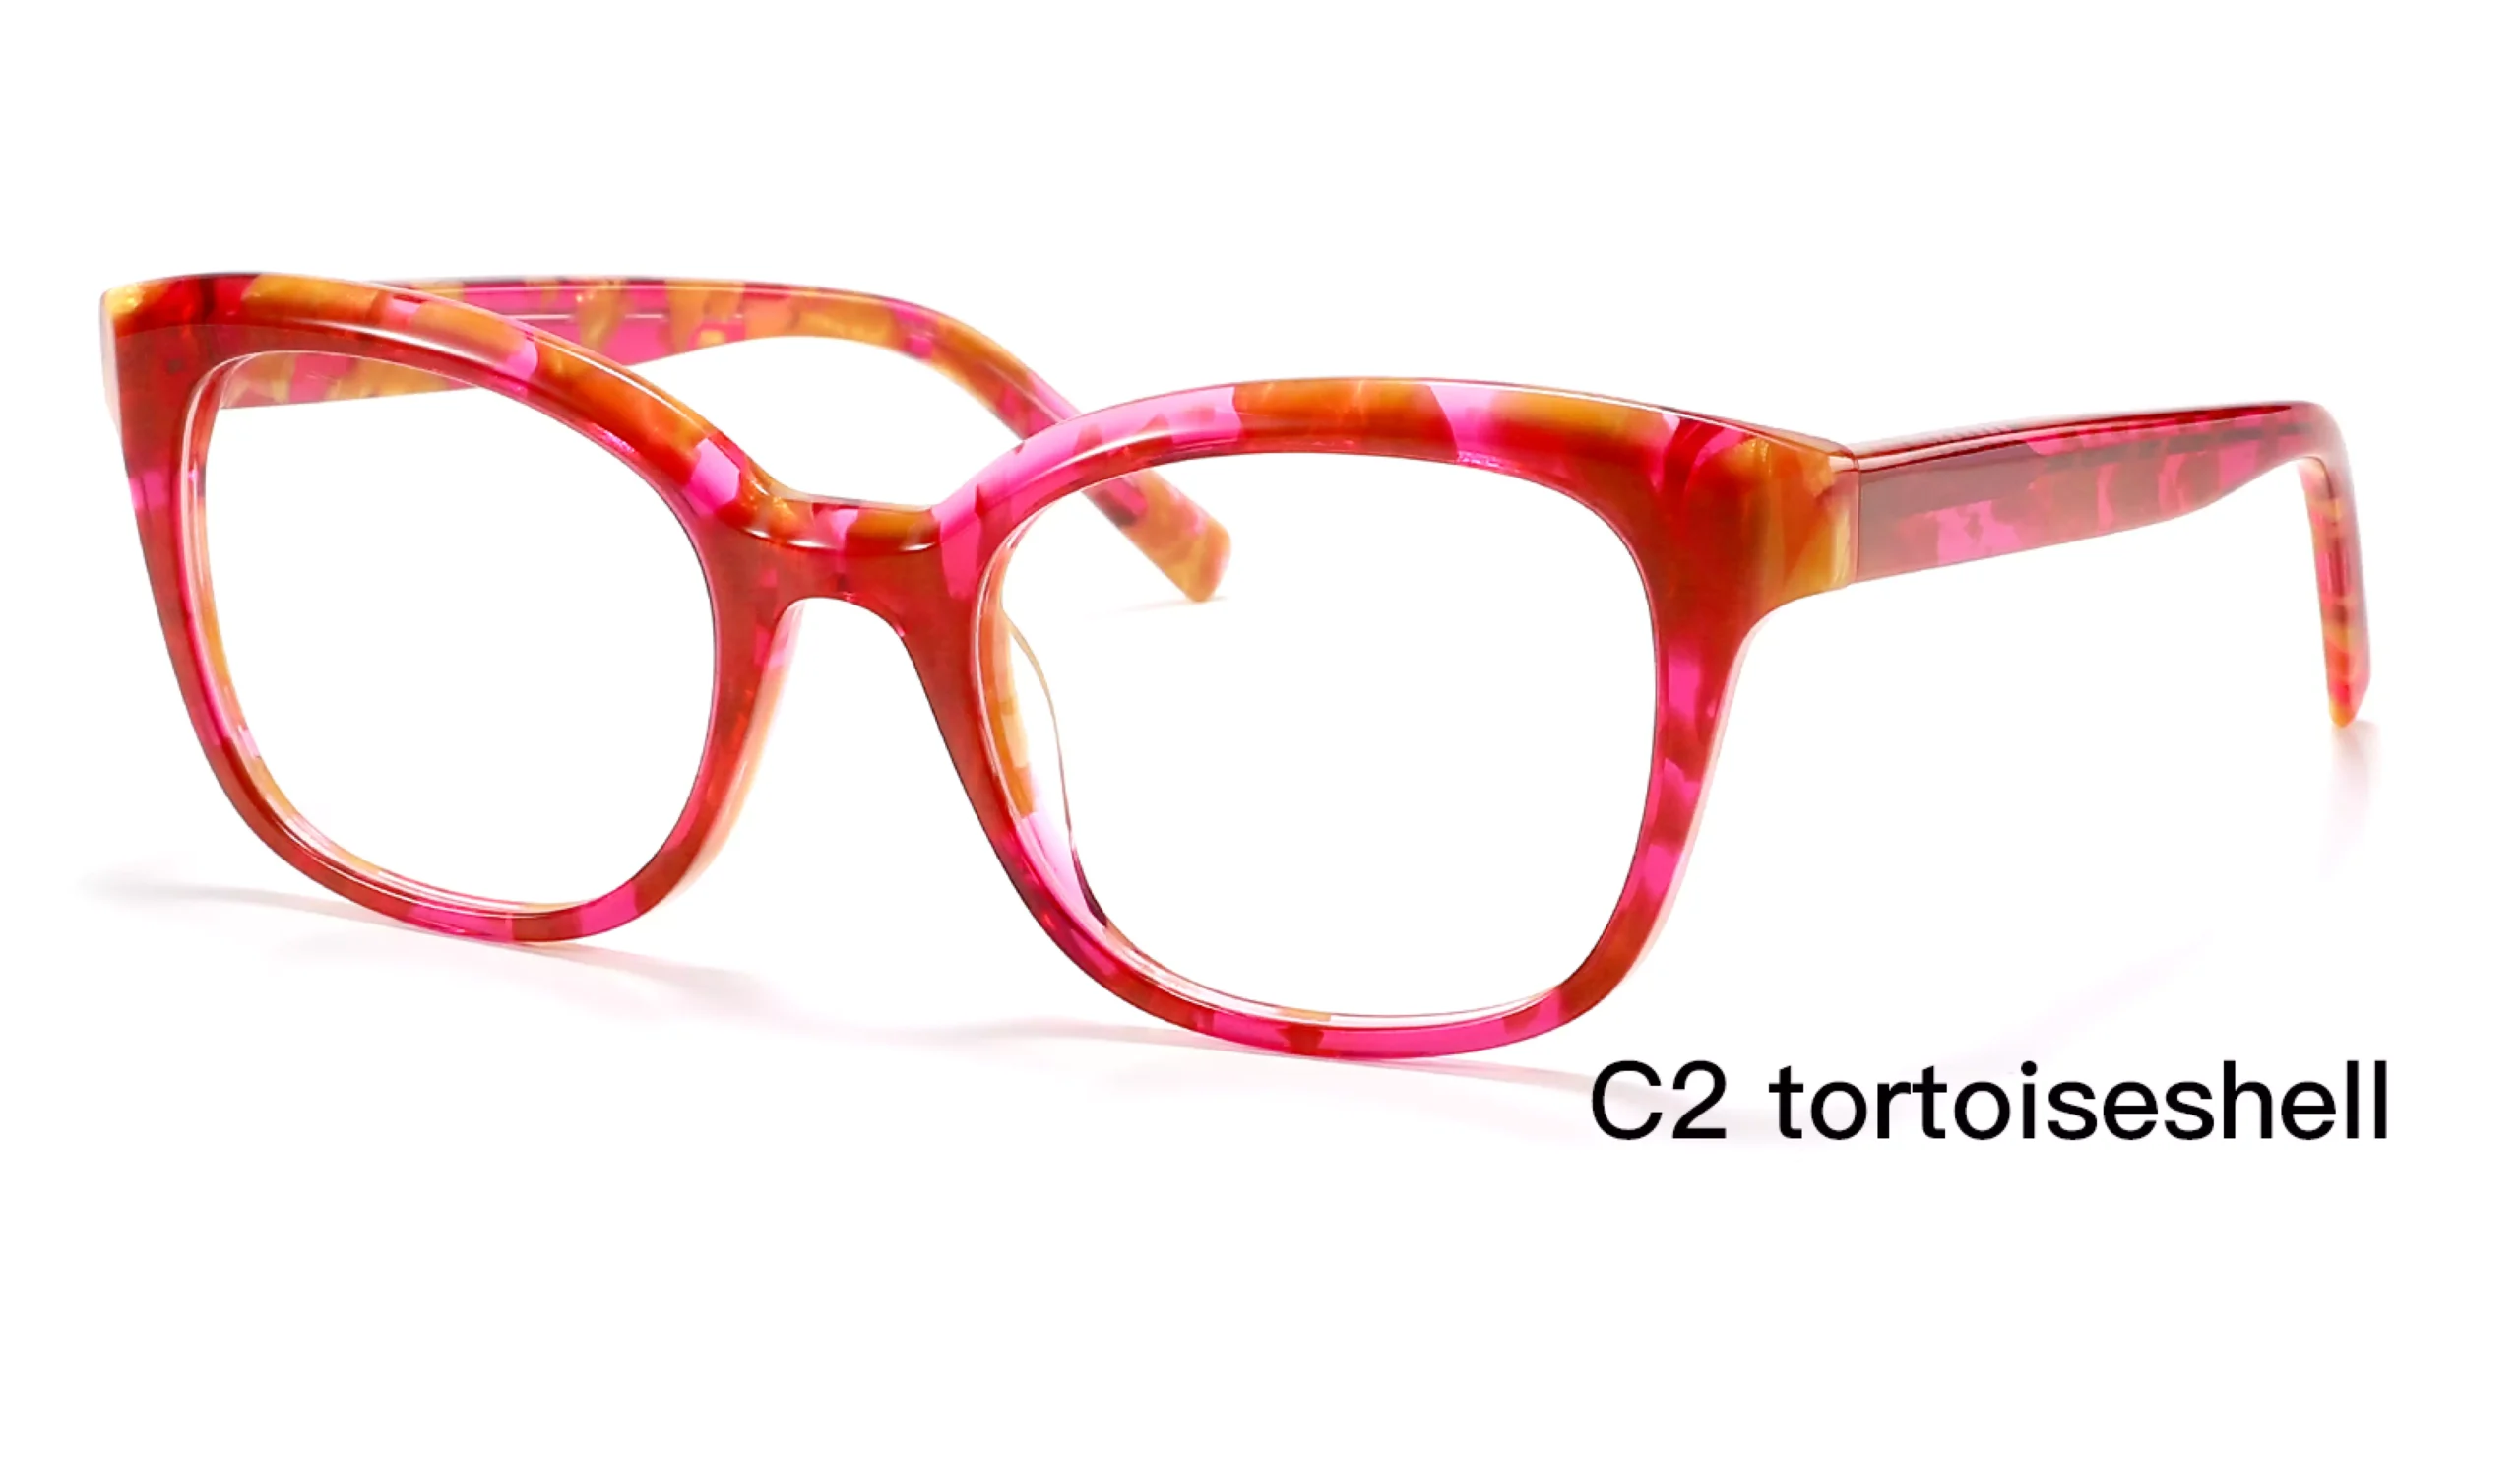 fall/winter trends, fashion, acetate eyeglass frames, suitable for women,tortoiseshell, round,designer designs, 45 degree display